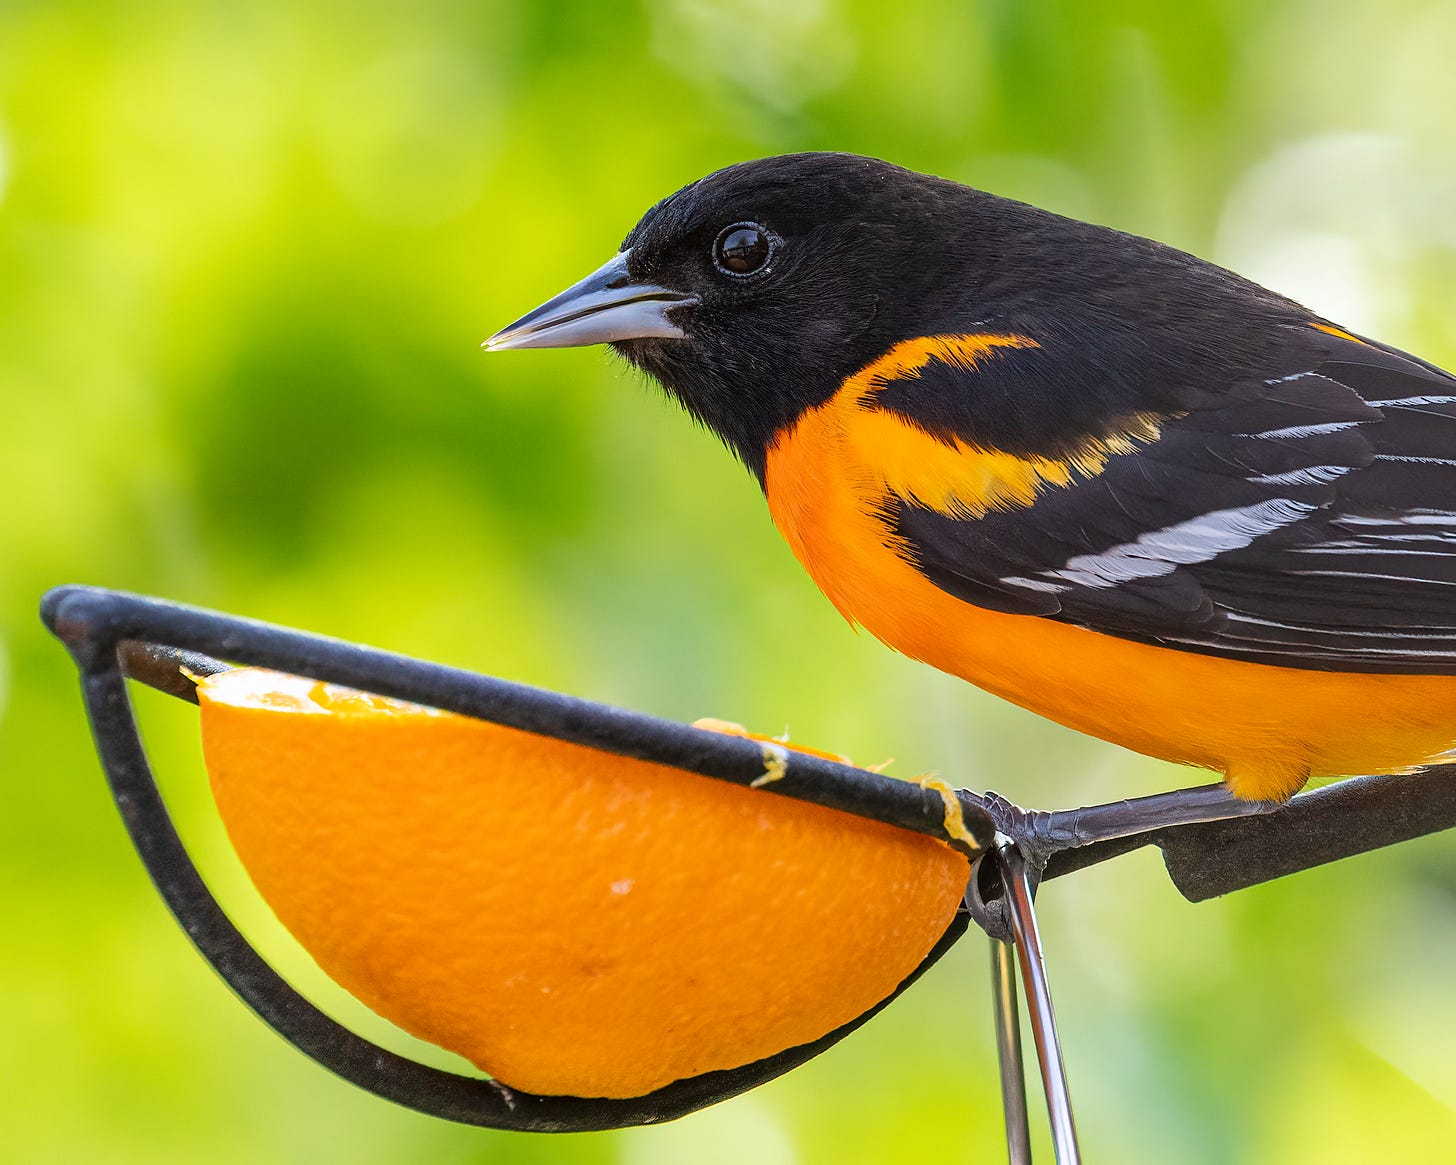 A baltimore oriole perches above half an orange at the bird feeder. The bird is a striking black and orange.